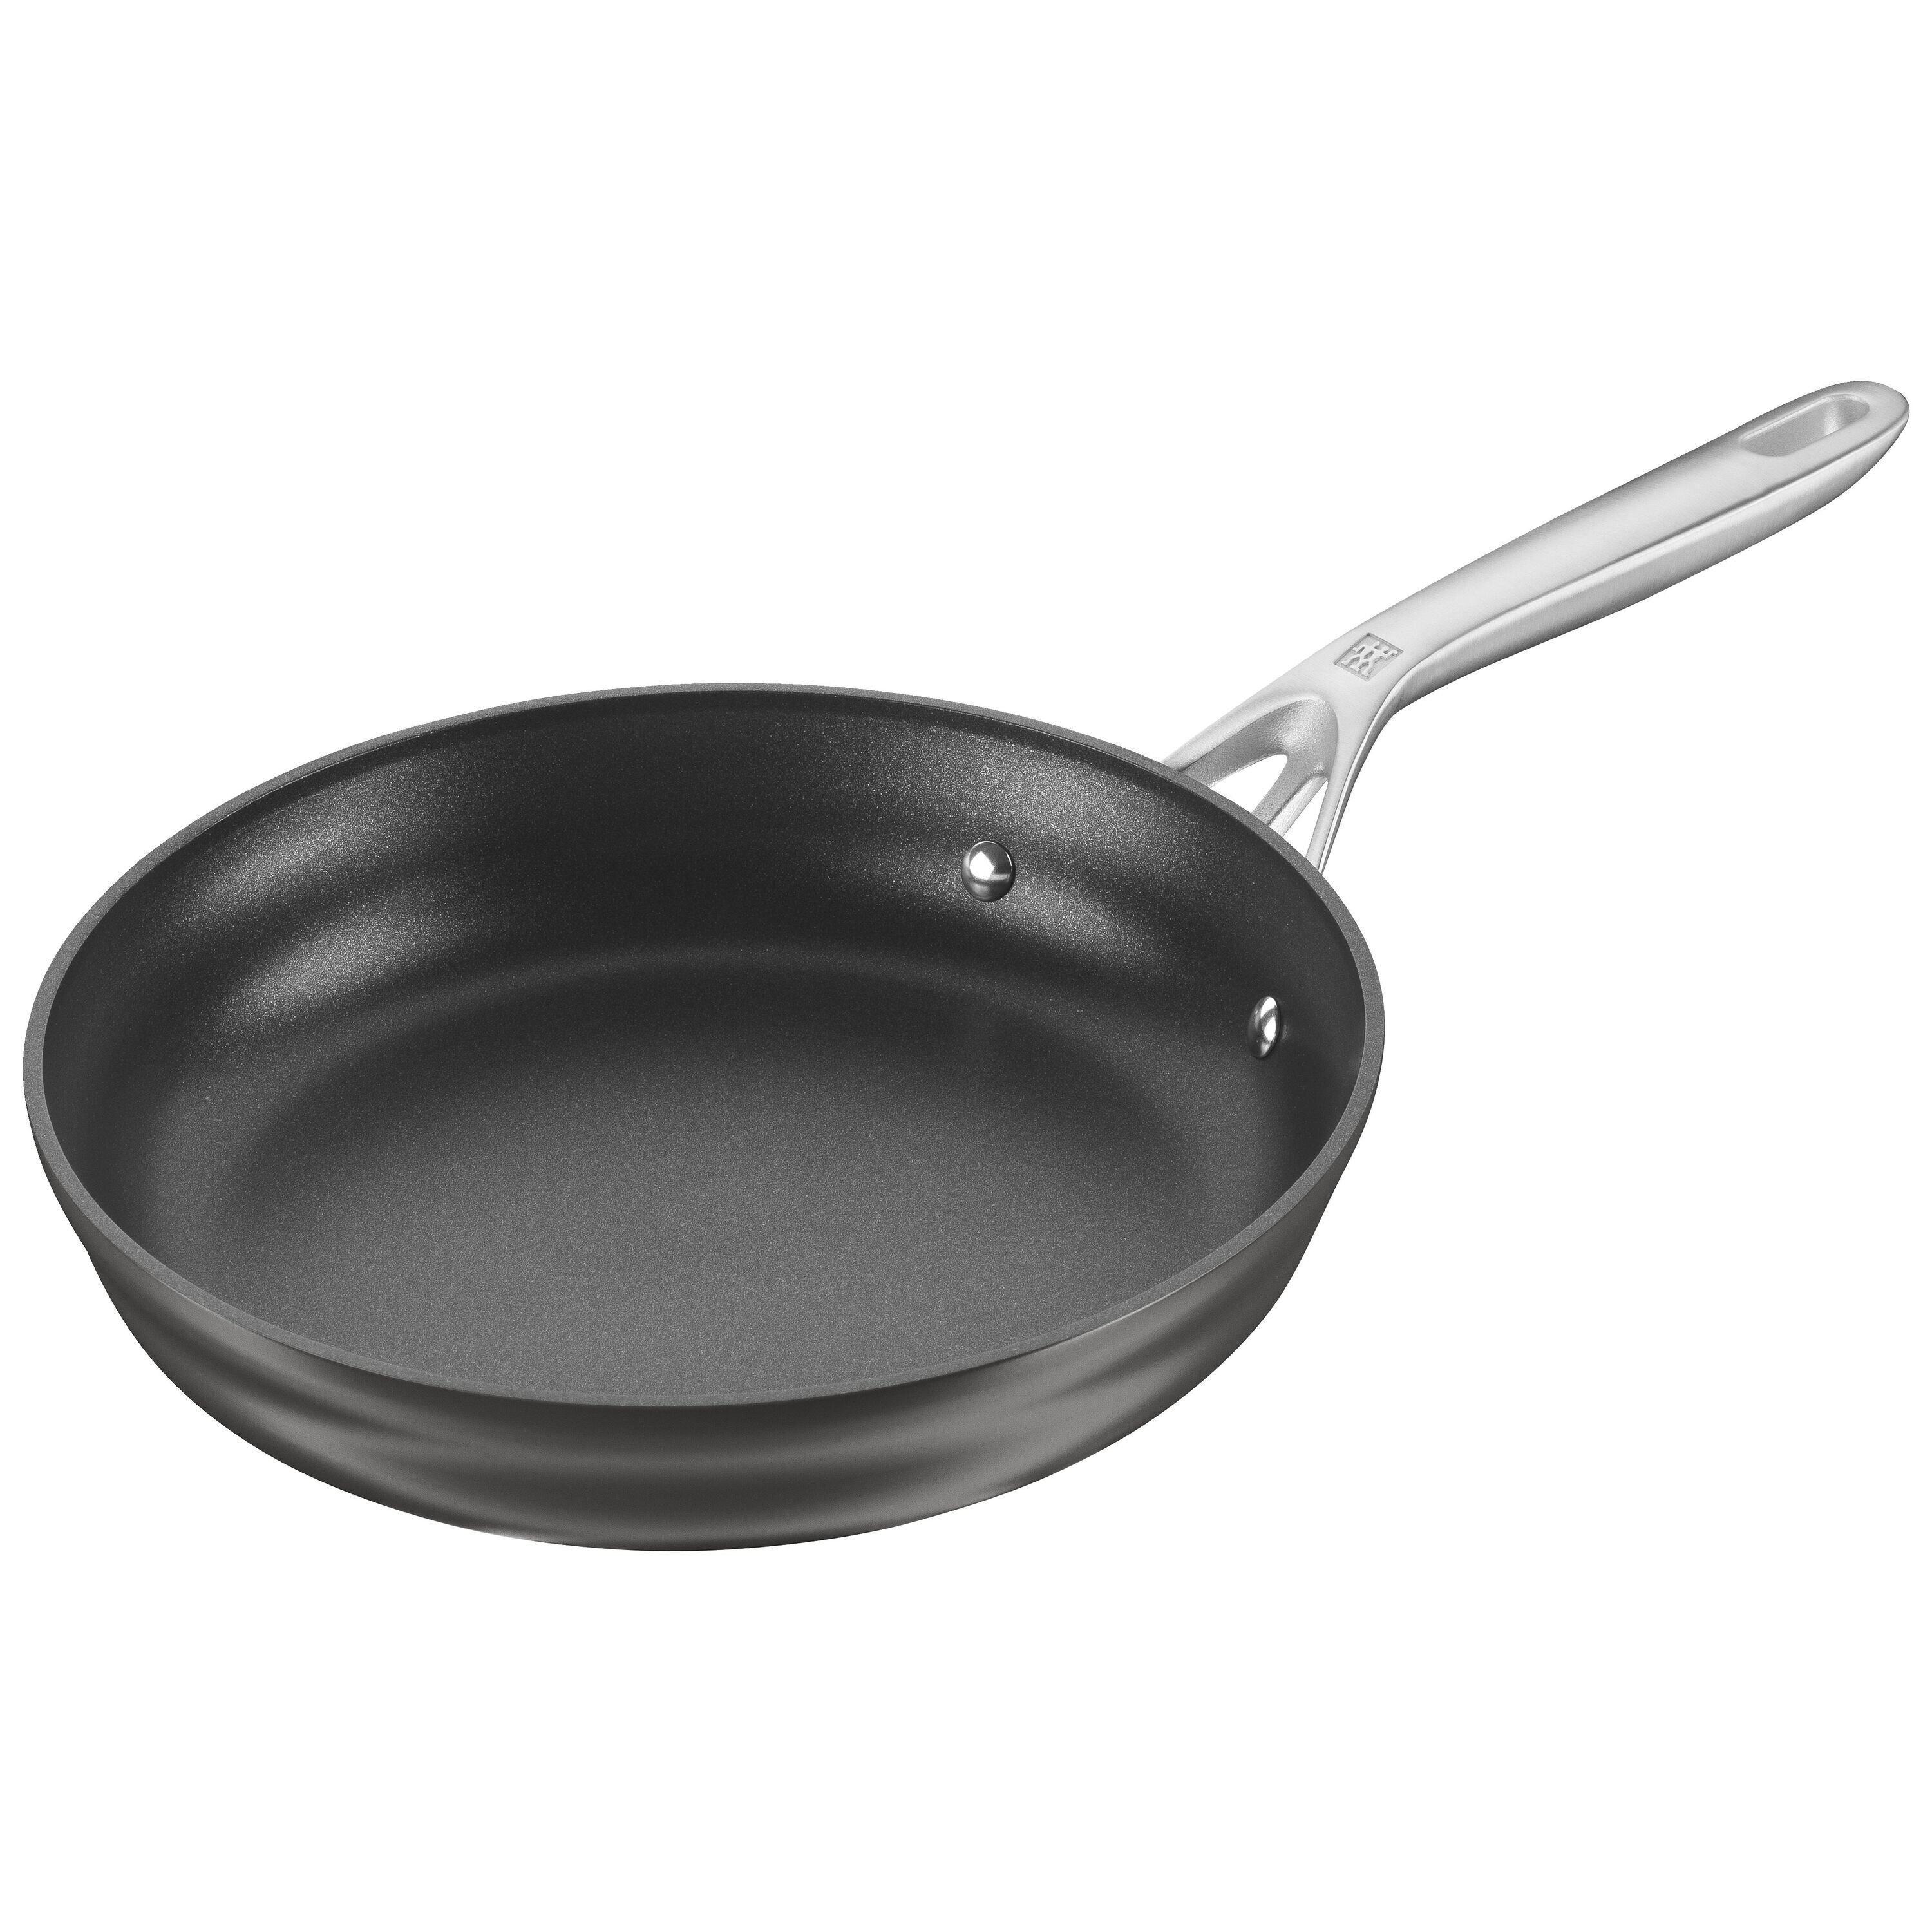 ZWILLING Madura plus Non-stick, Aluminum Deep Fry Pan